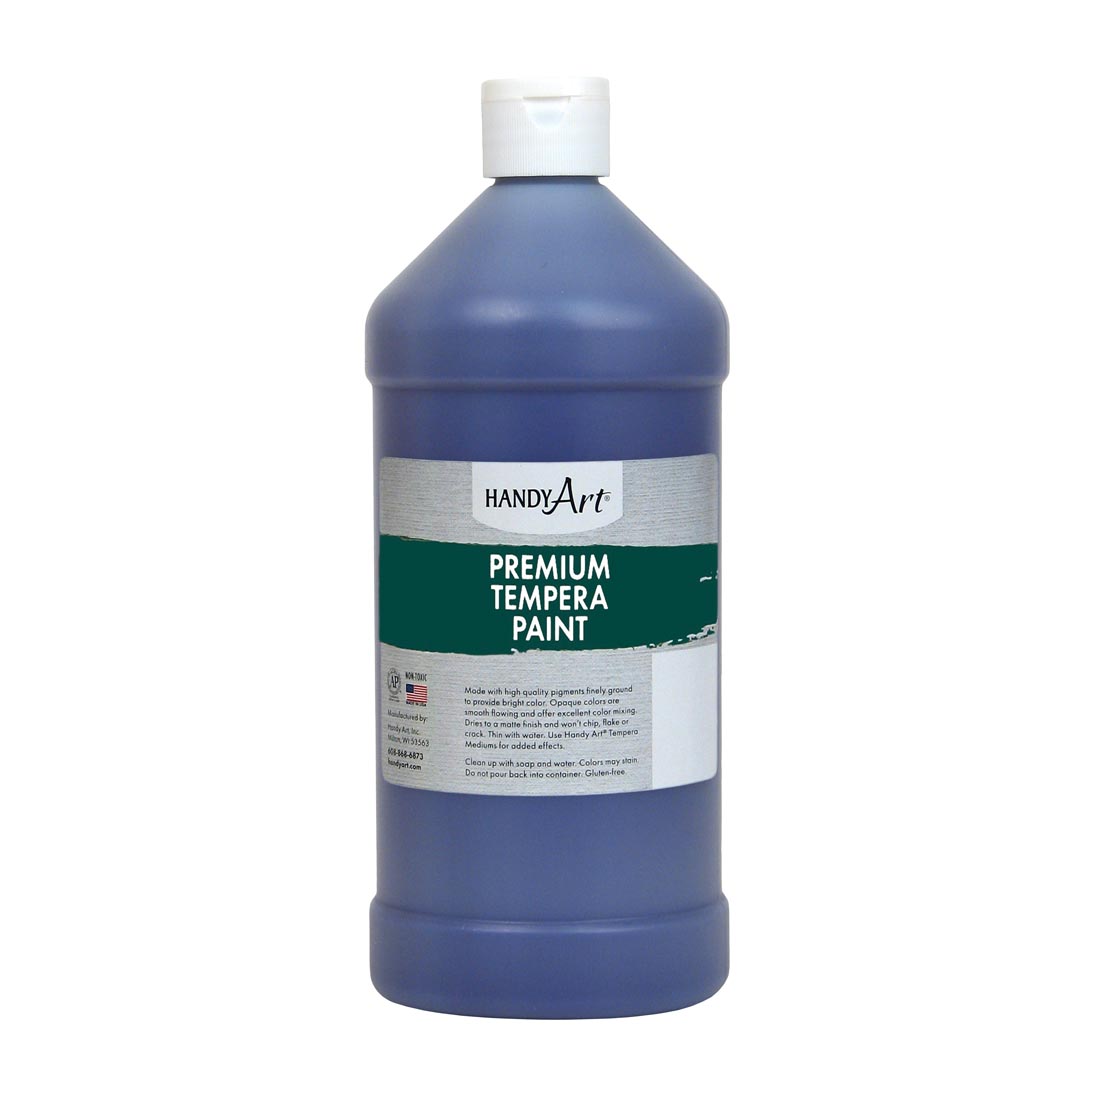 Quart bottle of Violet Handy Art Premium Tempera Paint